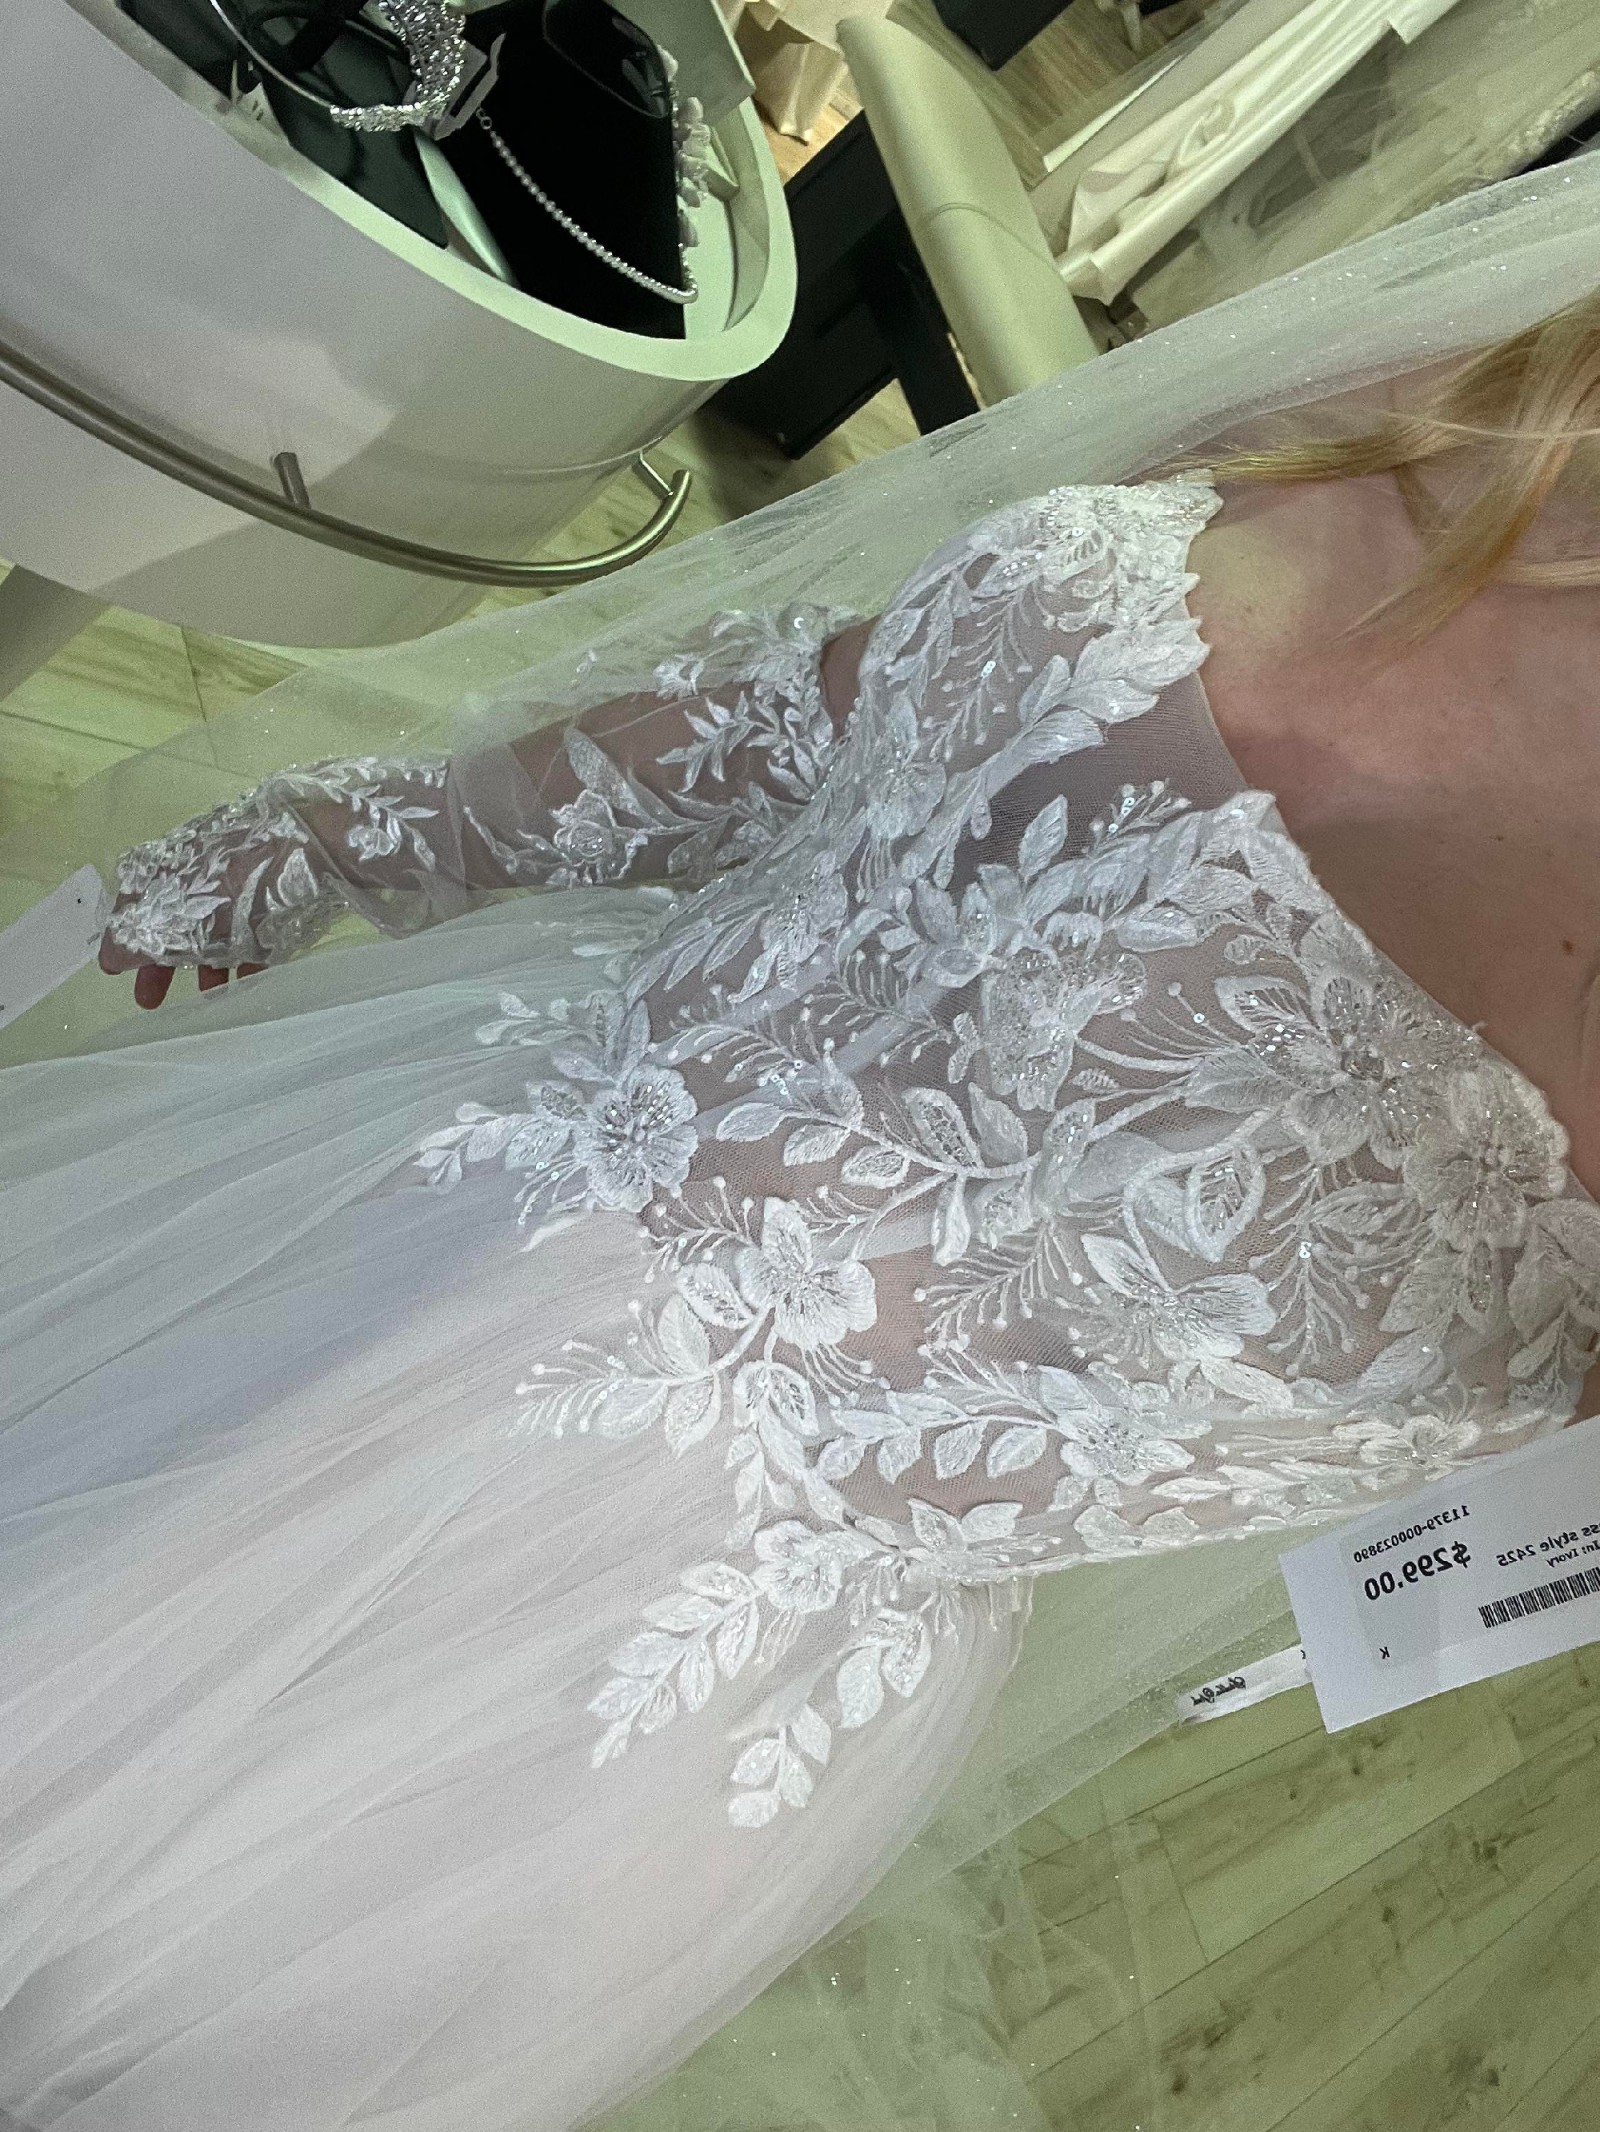 Stella York 6793IV Wedding Dress Save 50% - Stillwhite